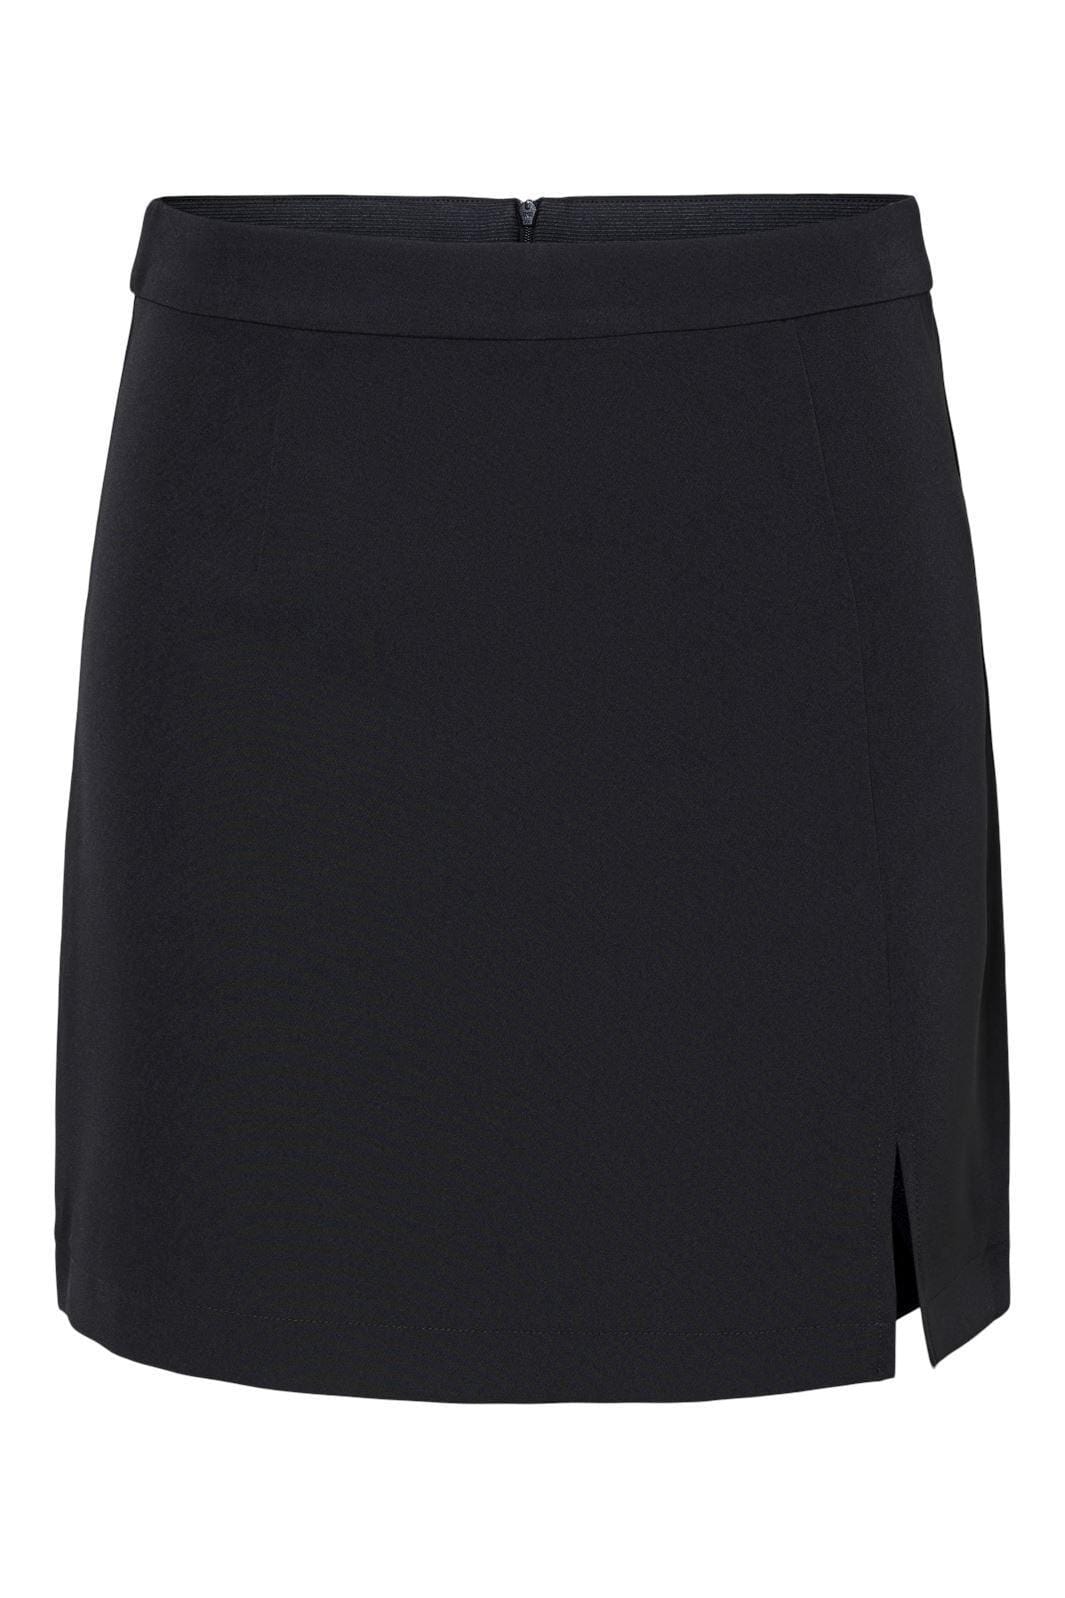 Pieces - Pcbozzy Slit Skirt - 4543165 Black